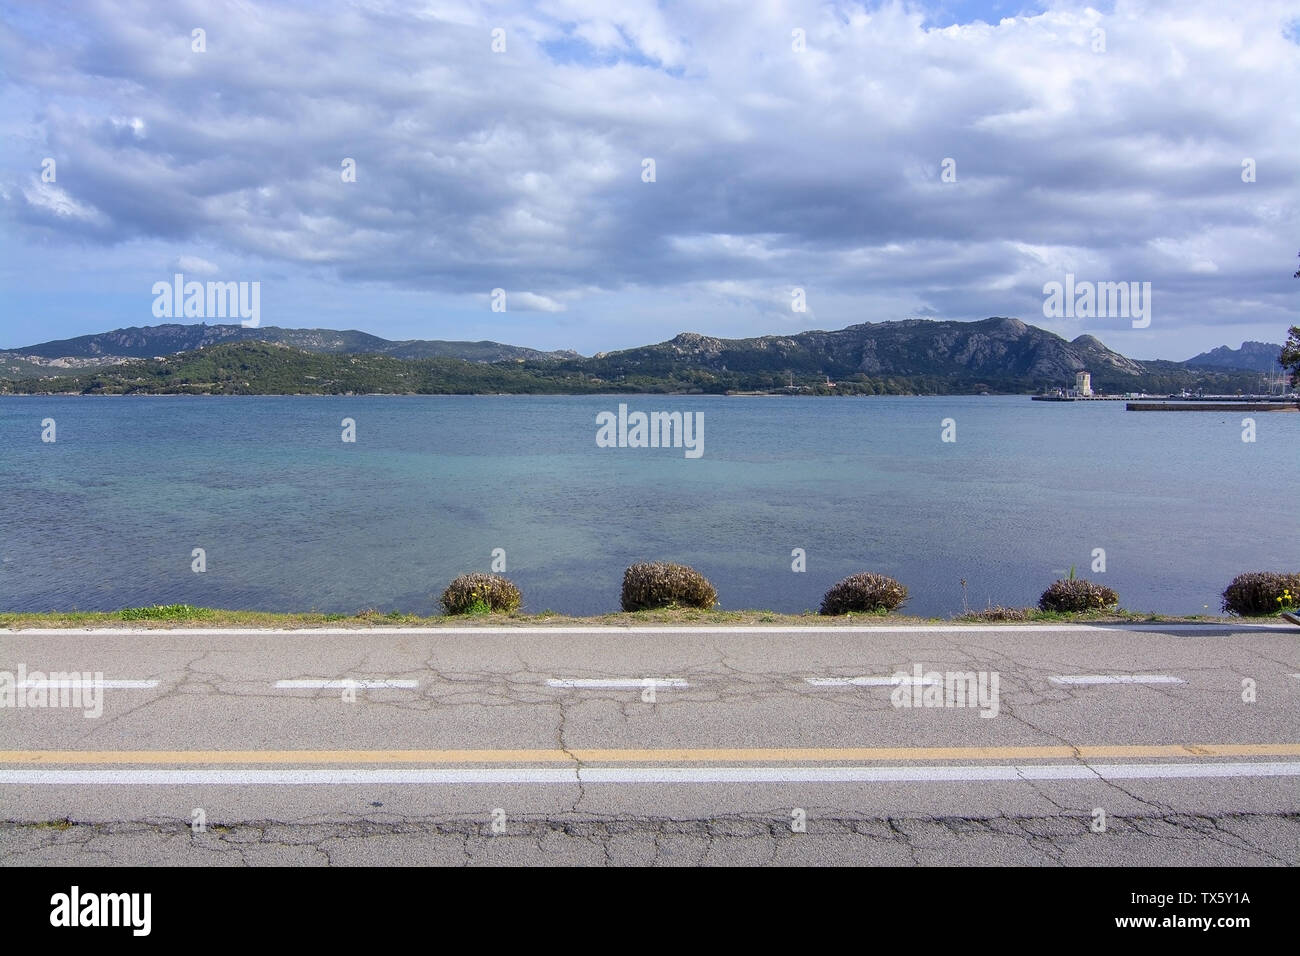 Asphalt countryroad horizontal cruza junto al mar Mediterráneo en Cerdeña, Italia. Foto de stock